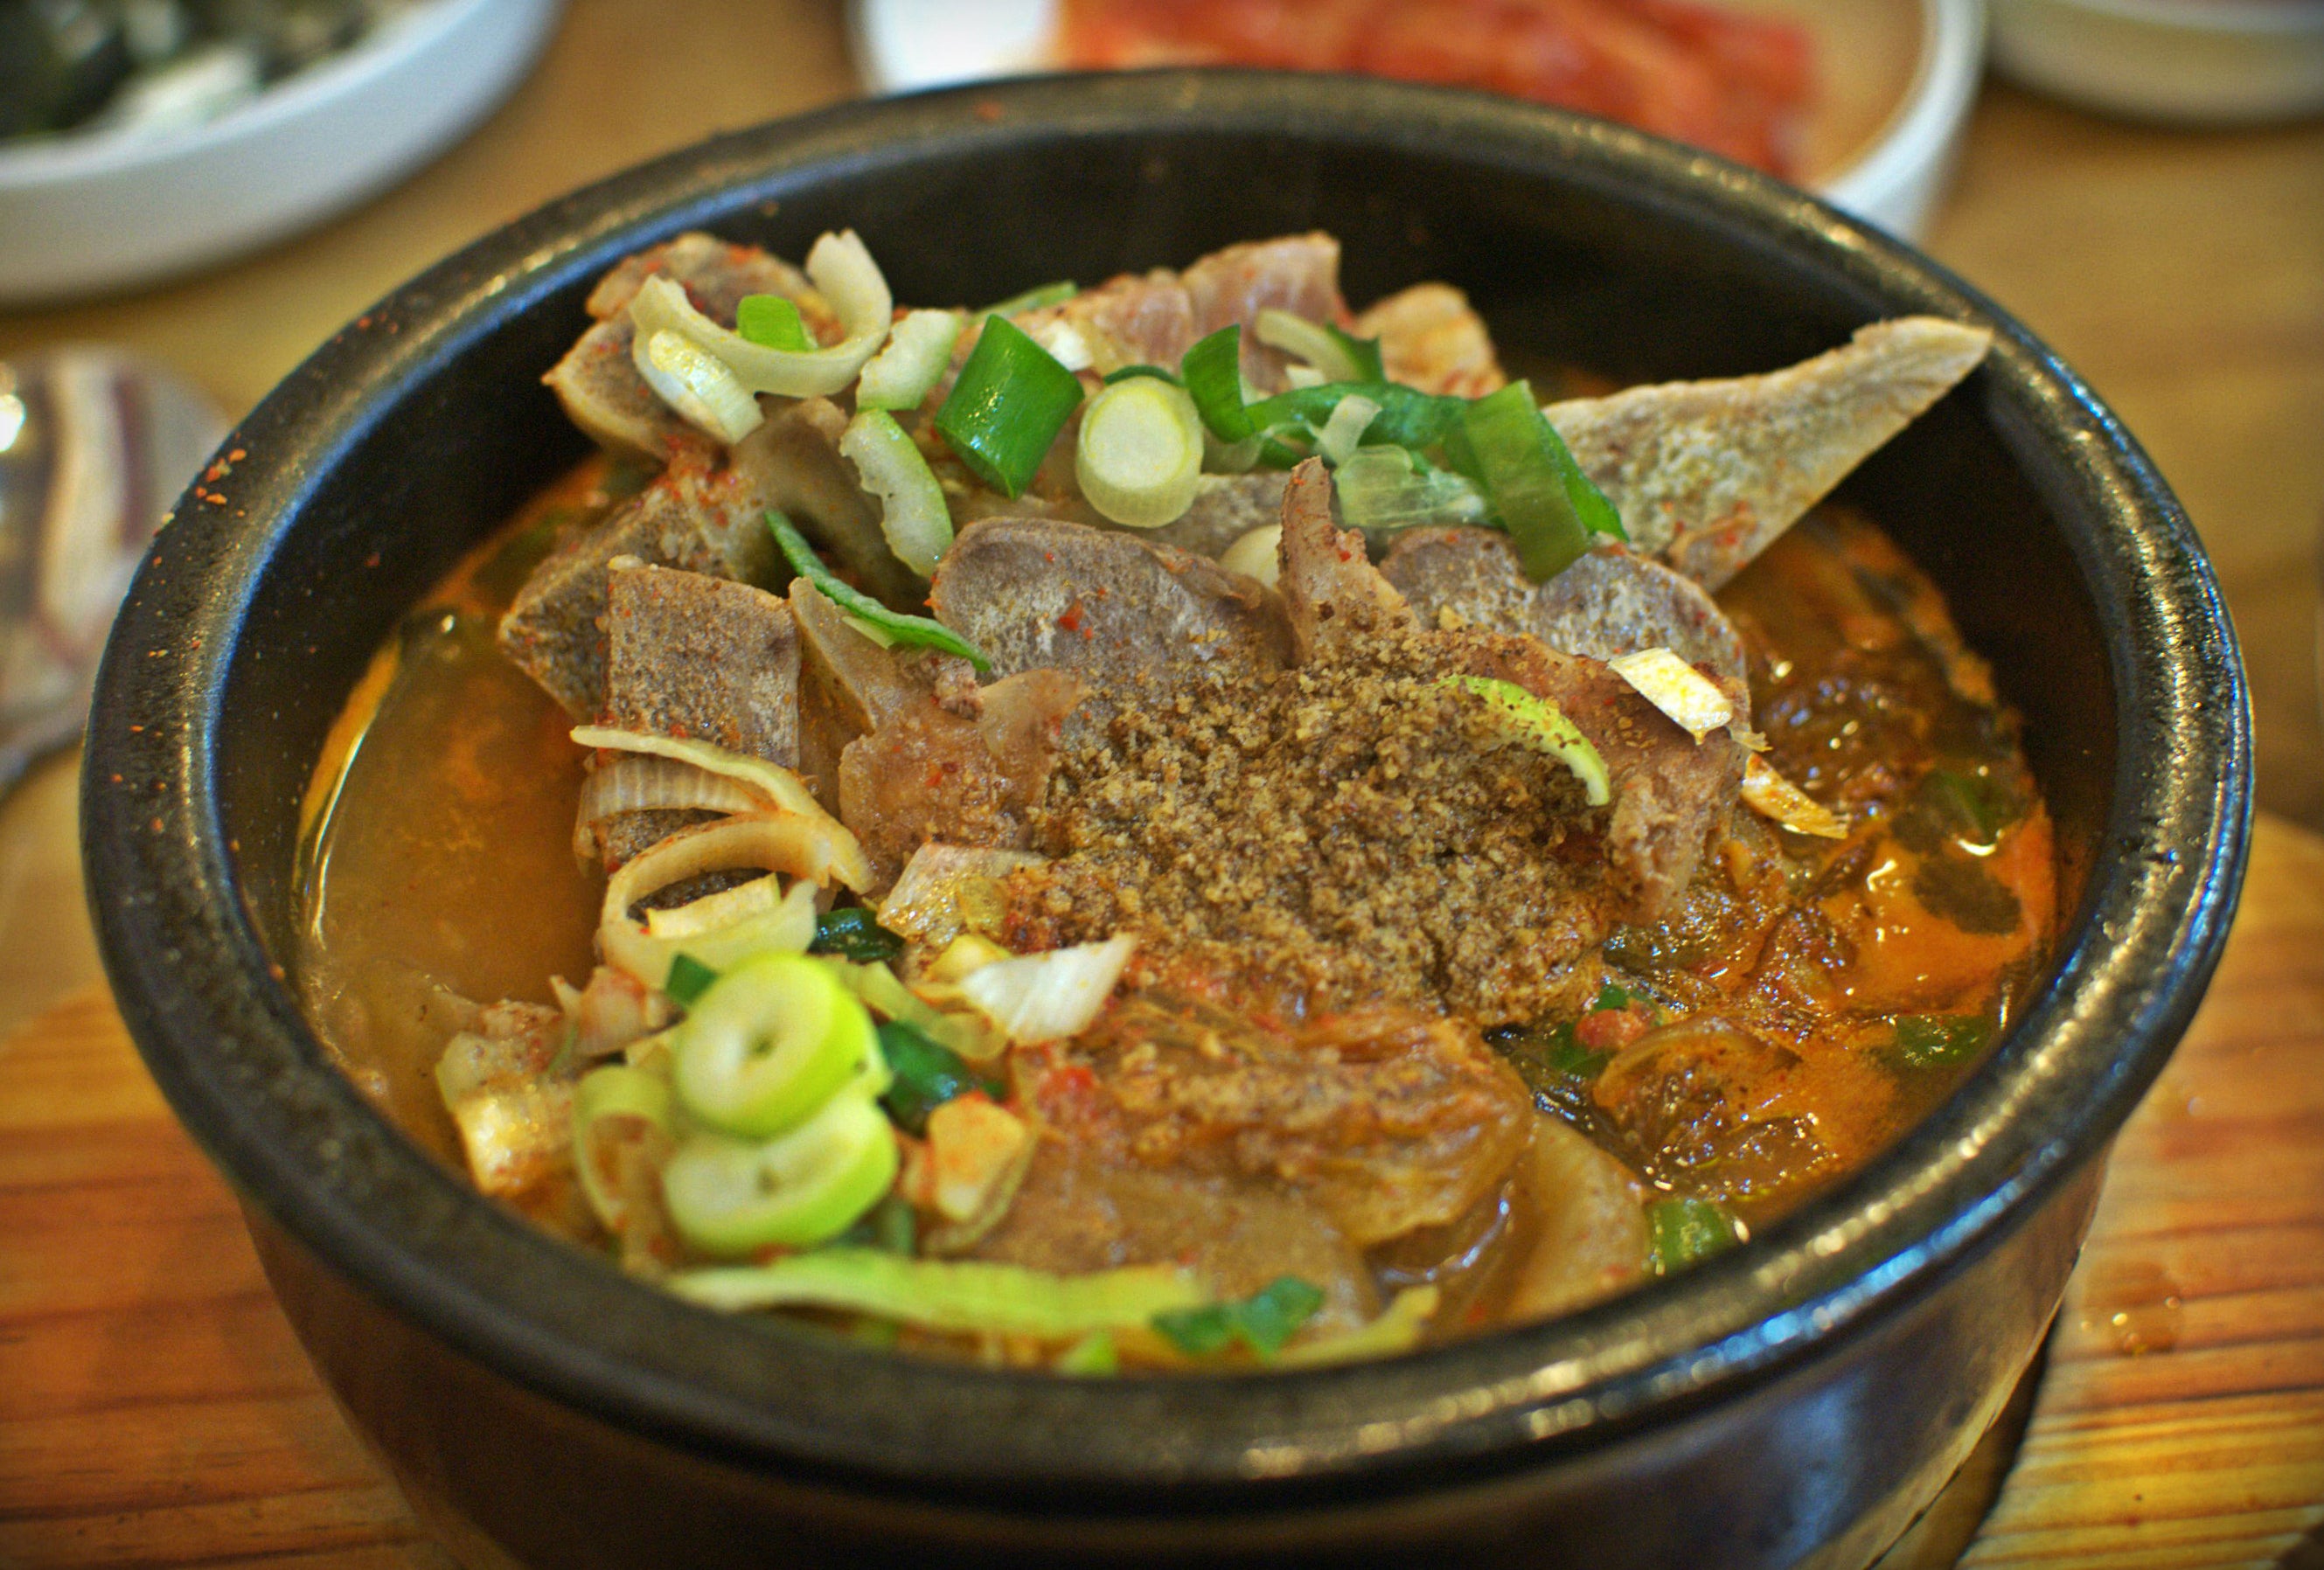 haejangguk made with pork